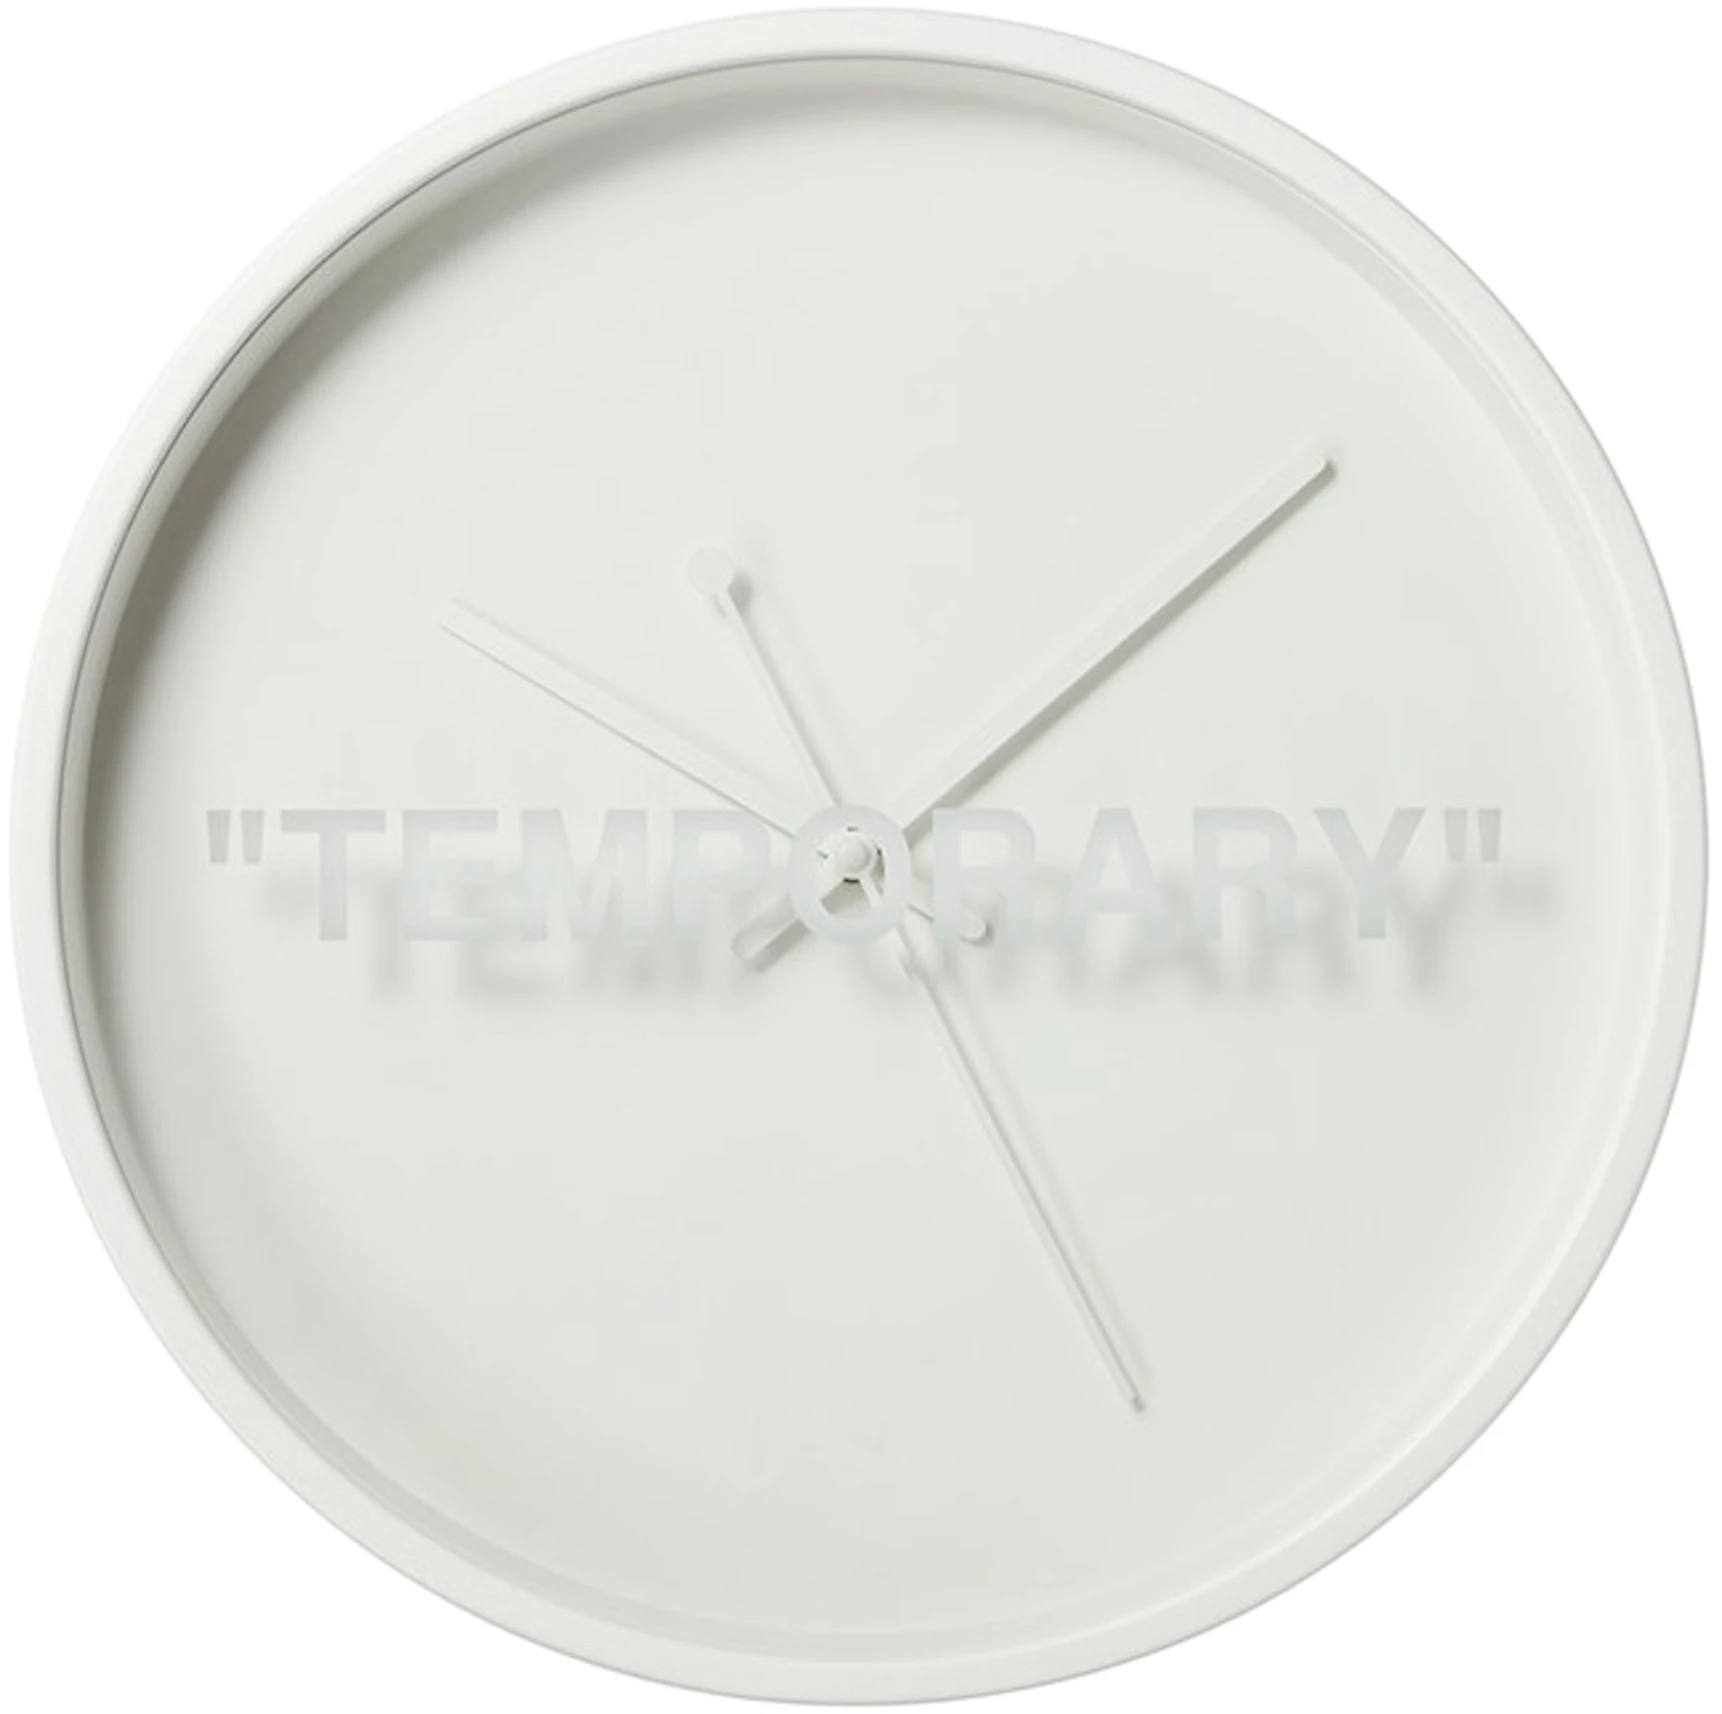 Bengelen herinneringen Trillen Virgil Abloh x IKEA MARKERAD "TEMPORARY" Wall Clock White - US